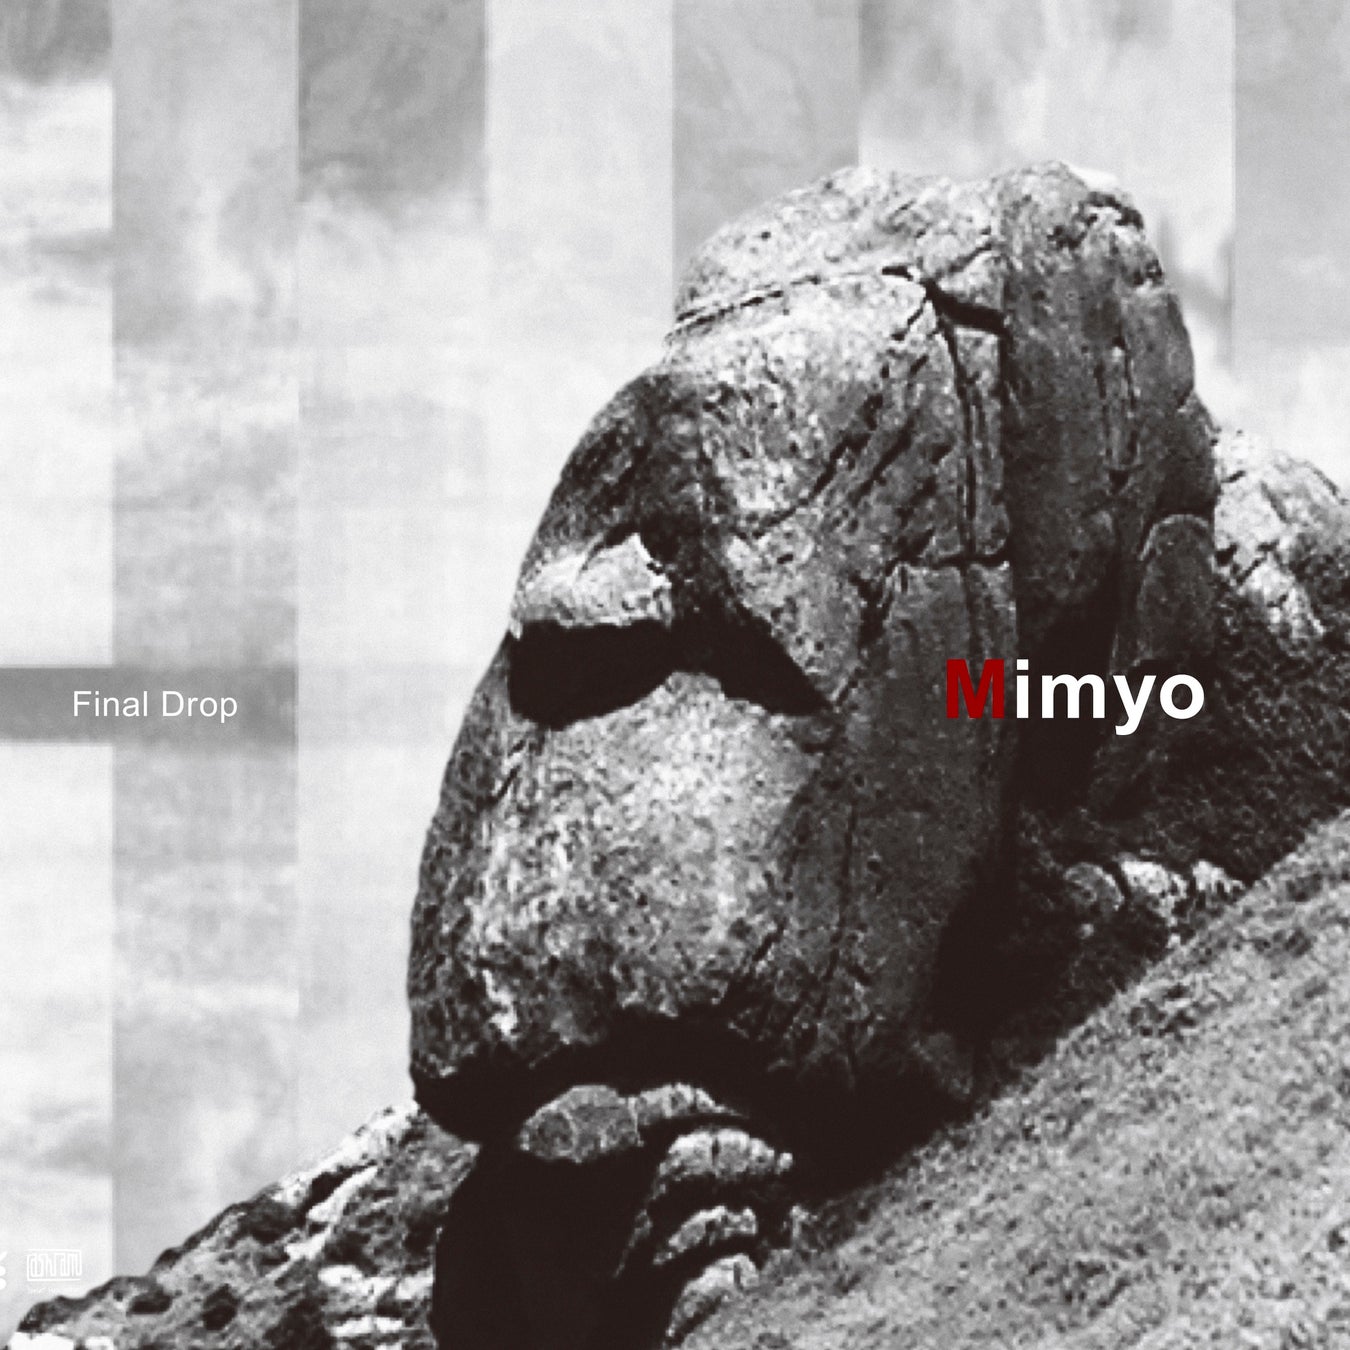 Final Drop「Mimyo」ジャケット (Front cover art)